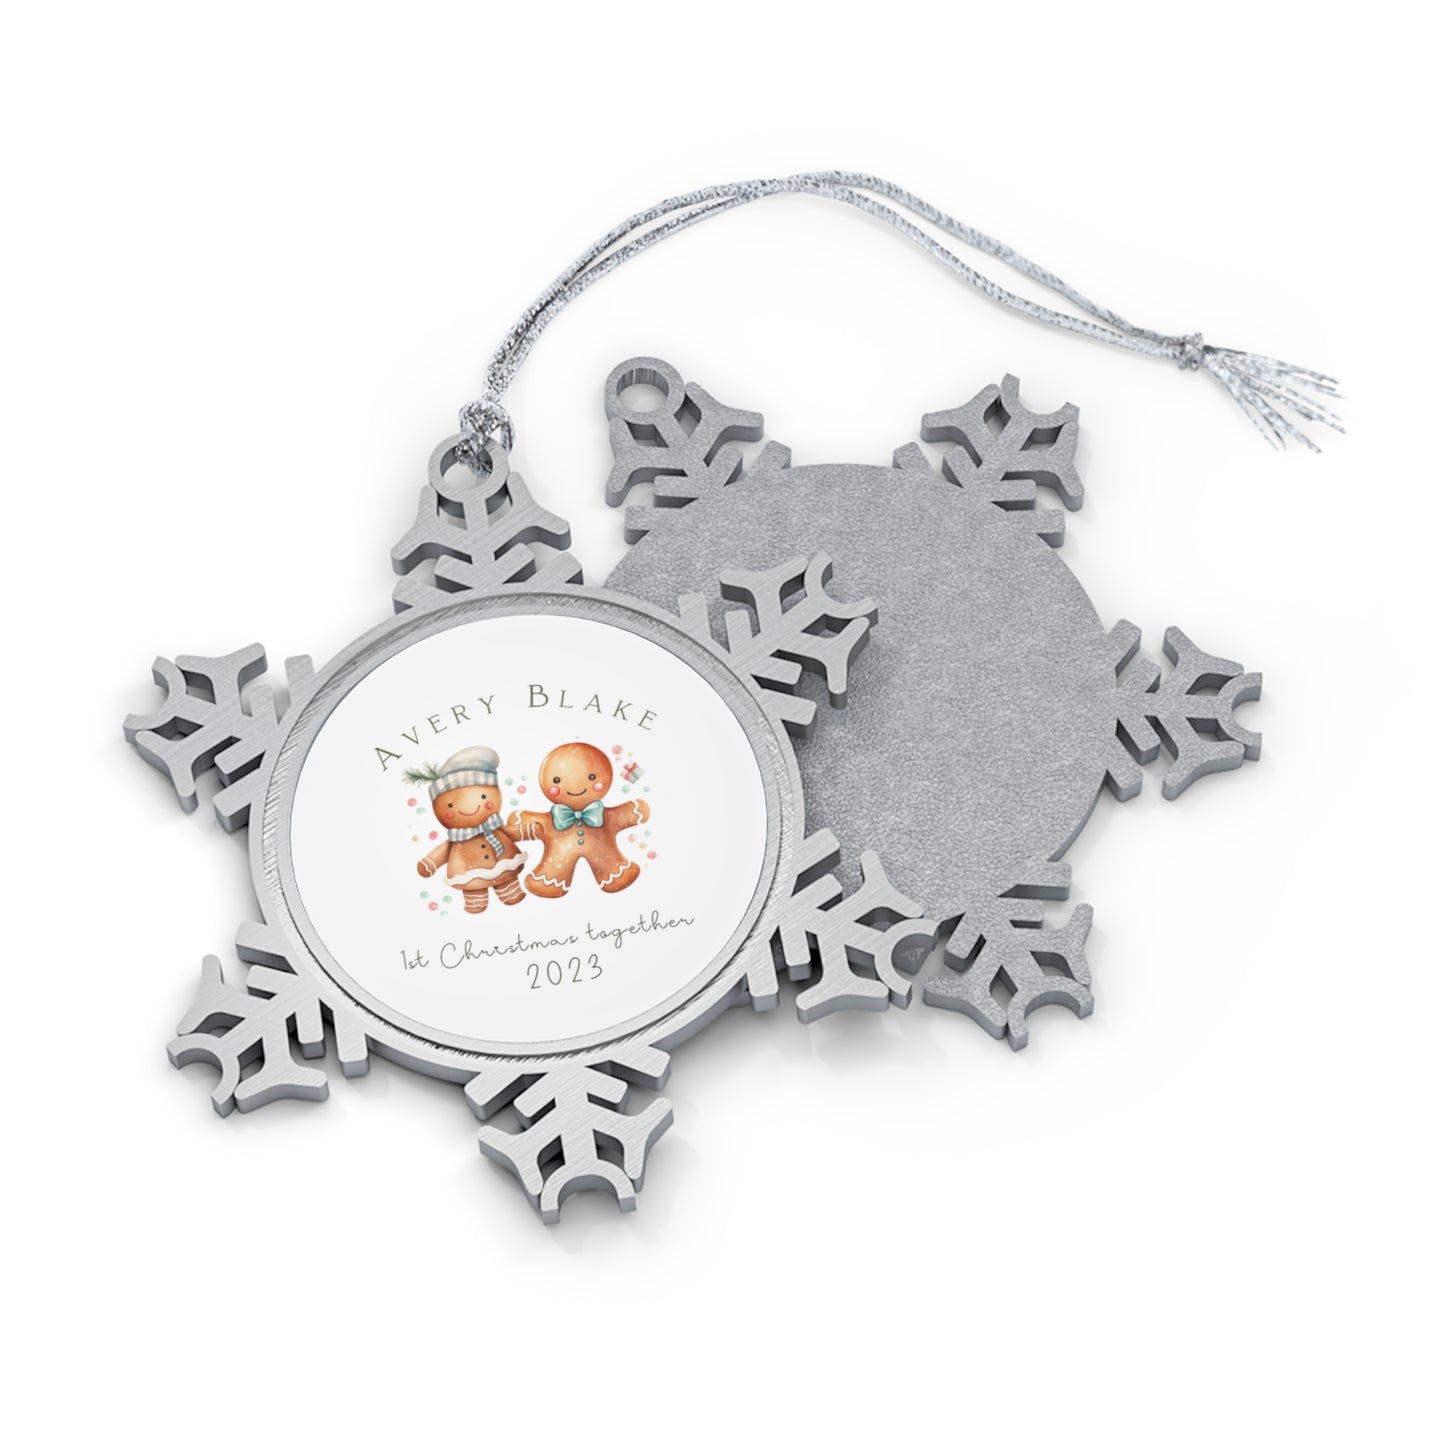 Personalised Pewter Snowflake Ornament | Gingerbread Man Friends